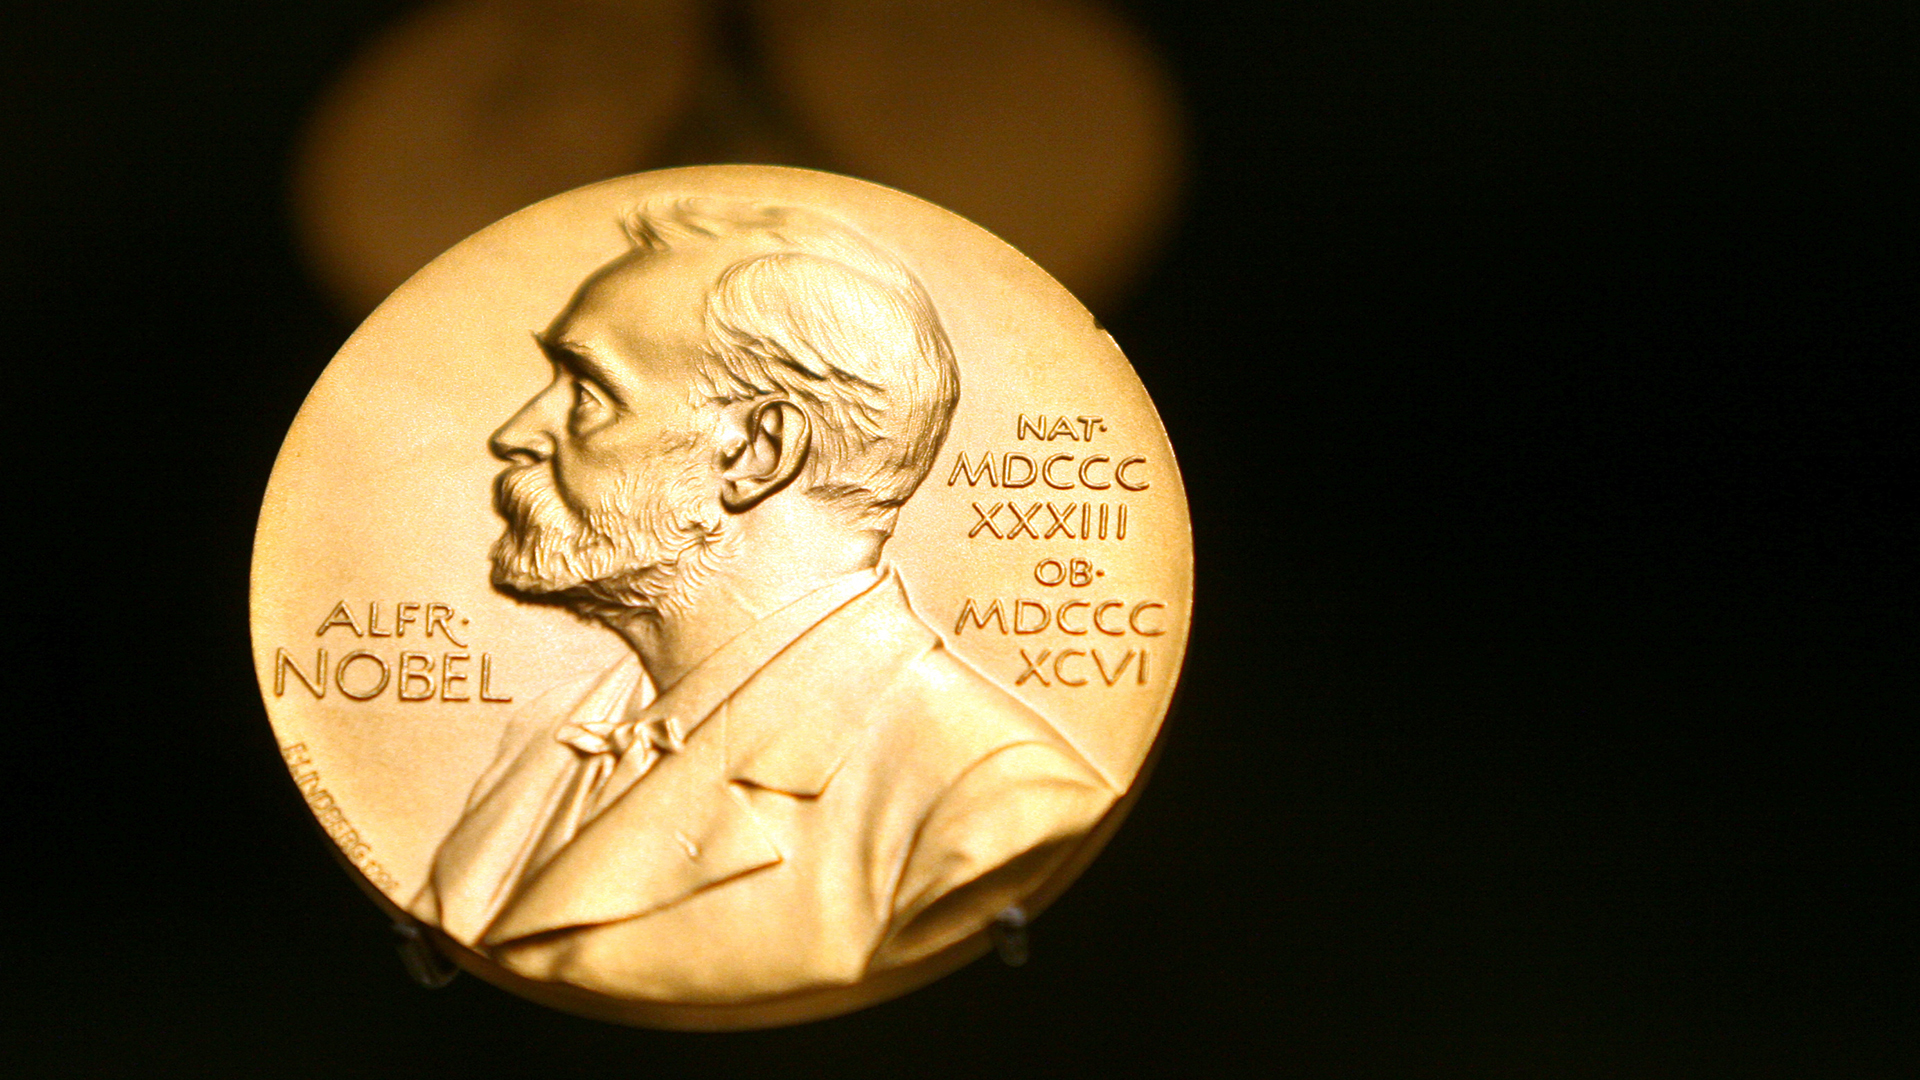 Nobelpreis-Medaille | picture alliance/dpa